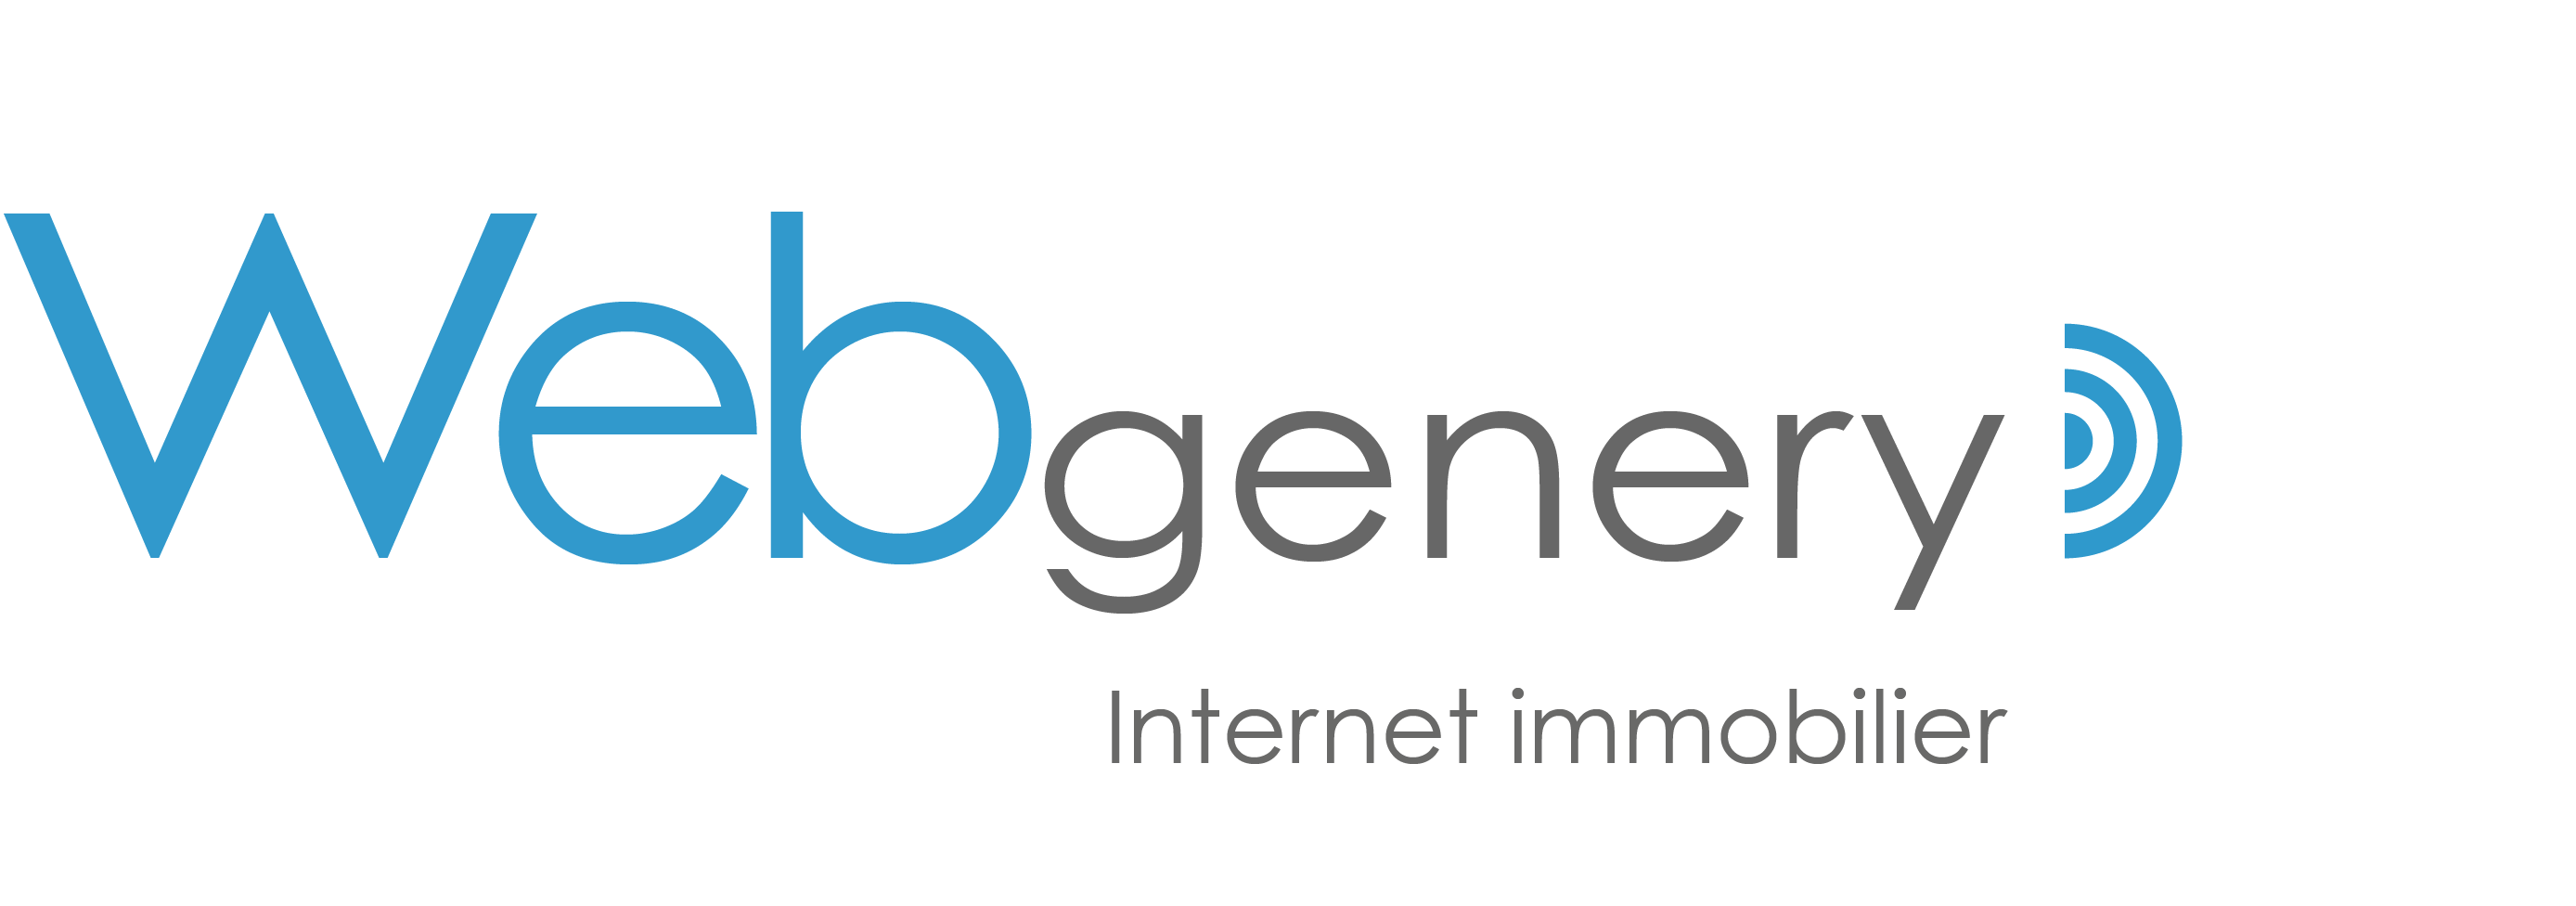 webgenery-logo